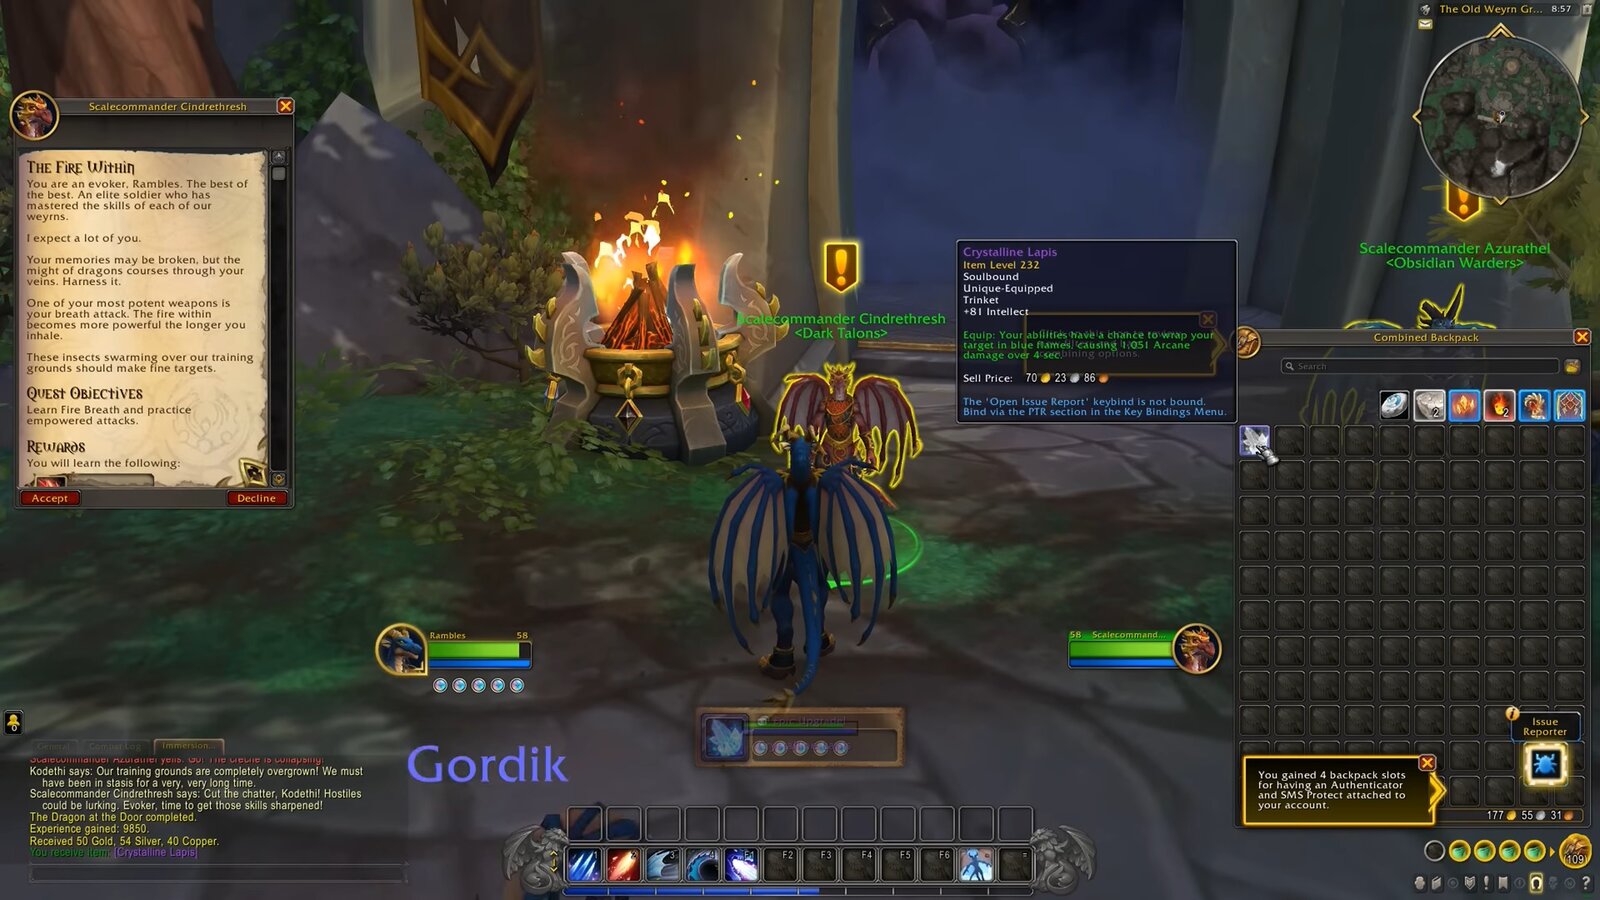 World of Warcraft: Dragonflight - Heroic Edition